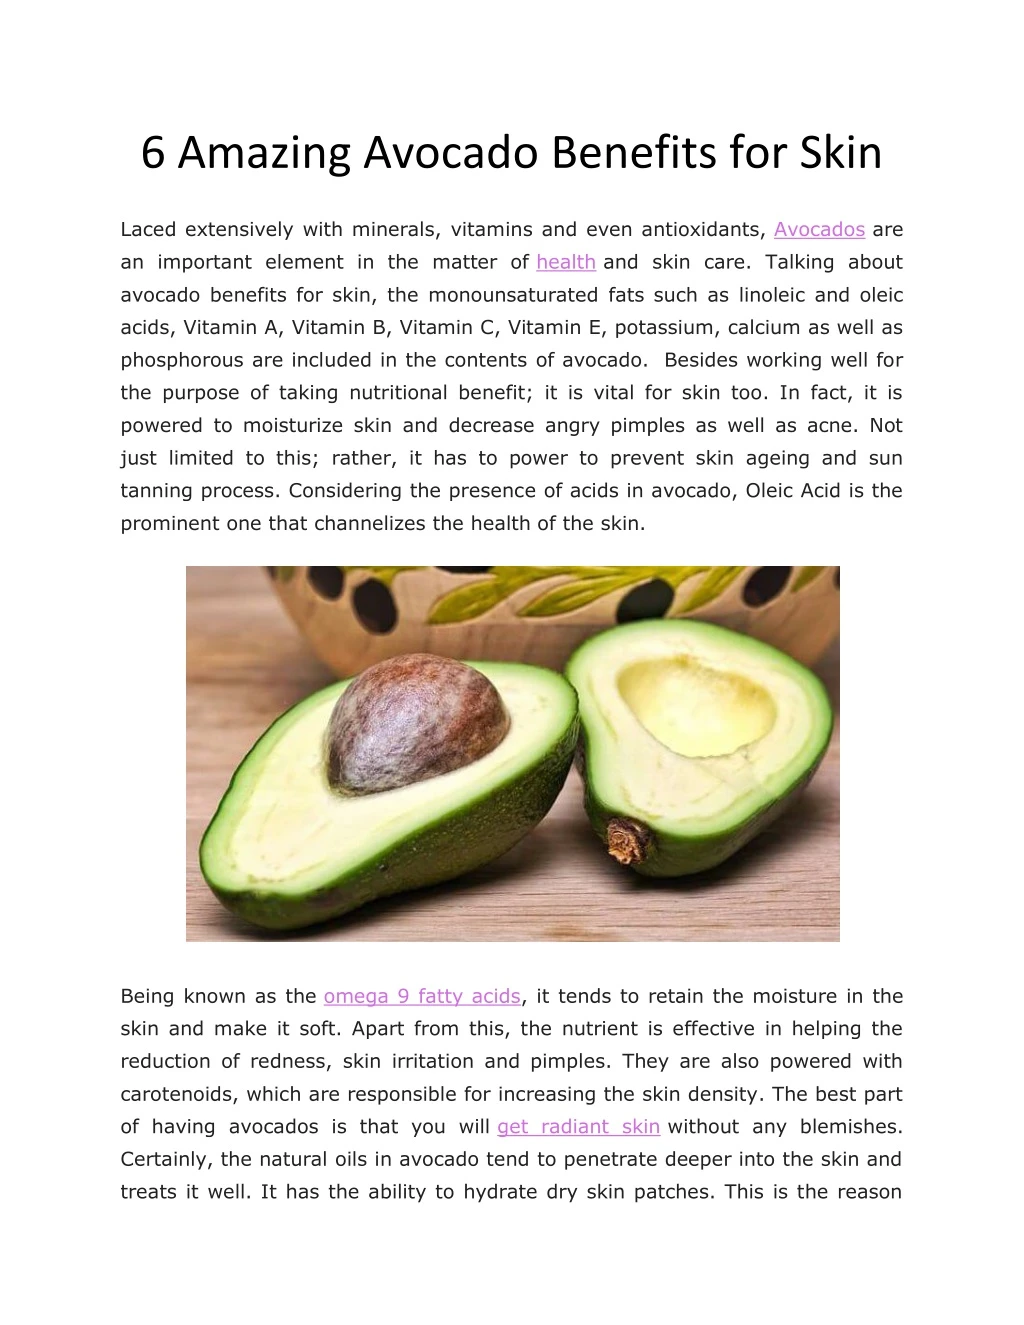 6 amazing avocado benefits for skin